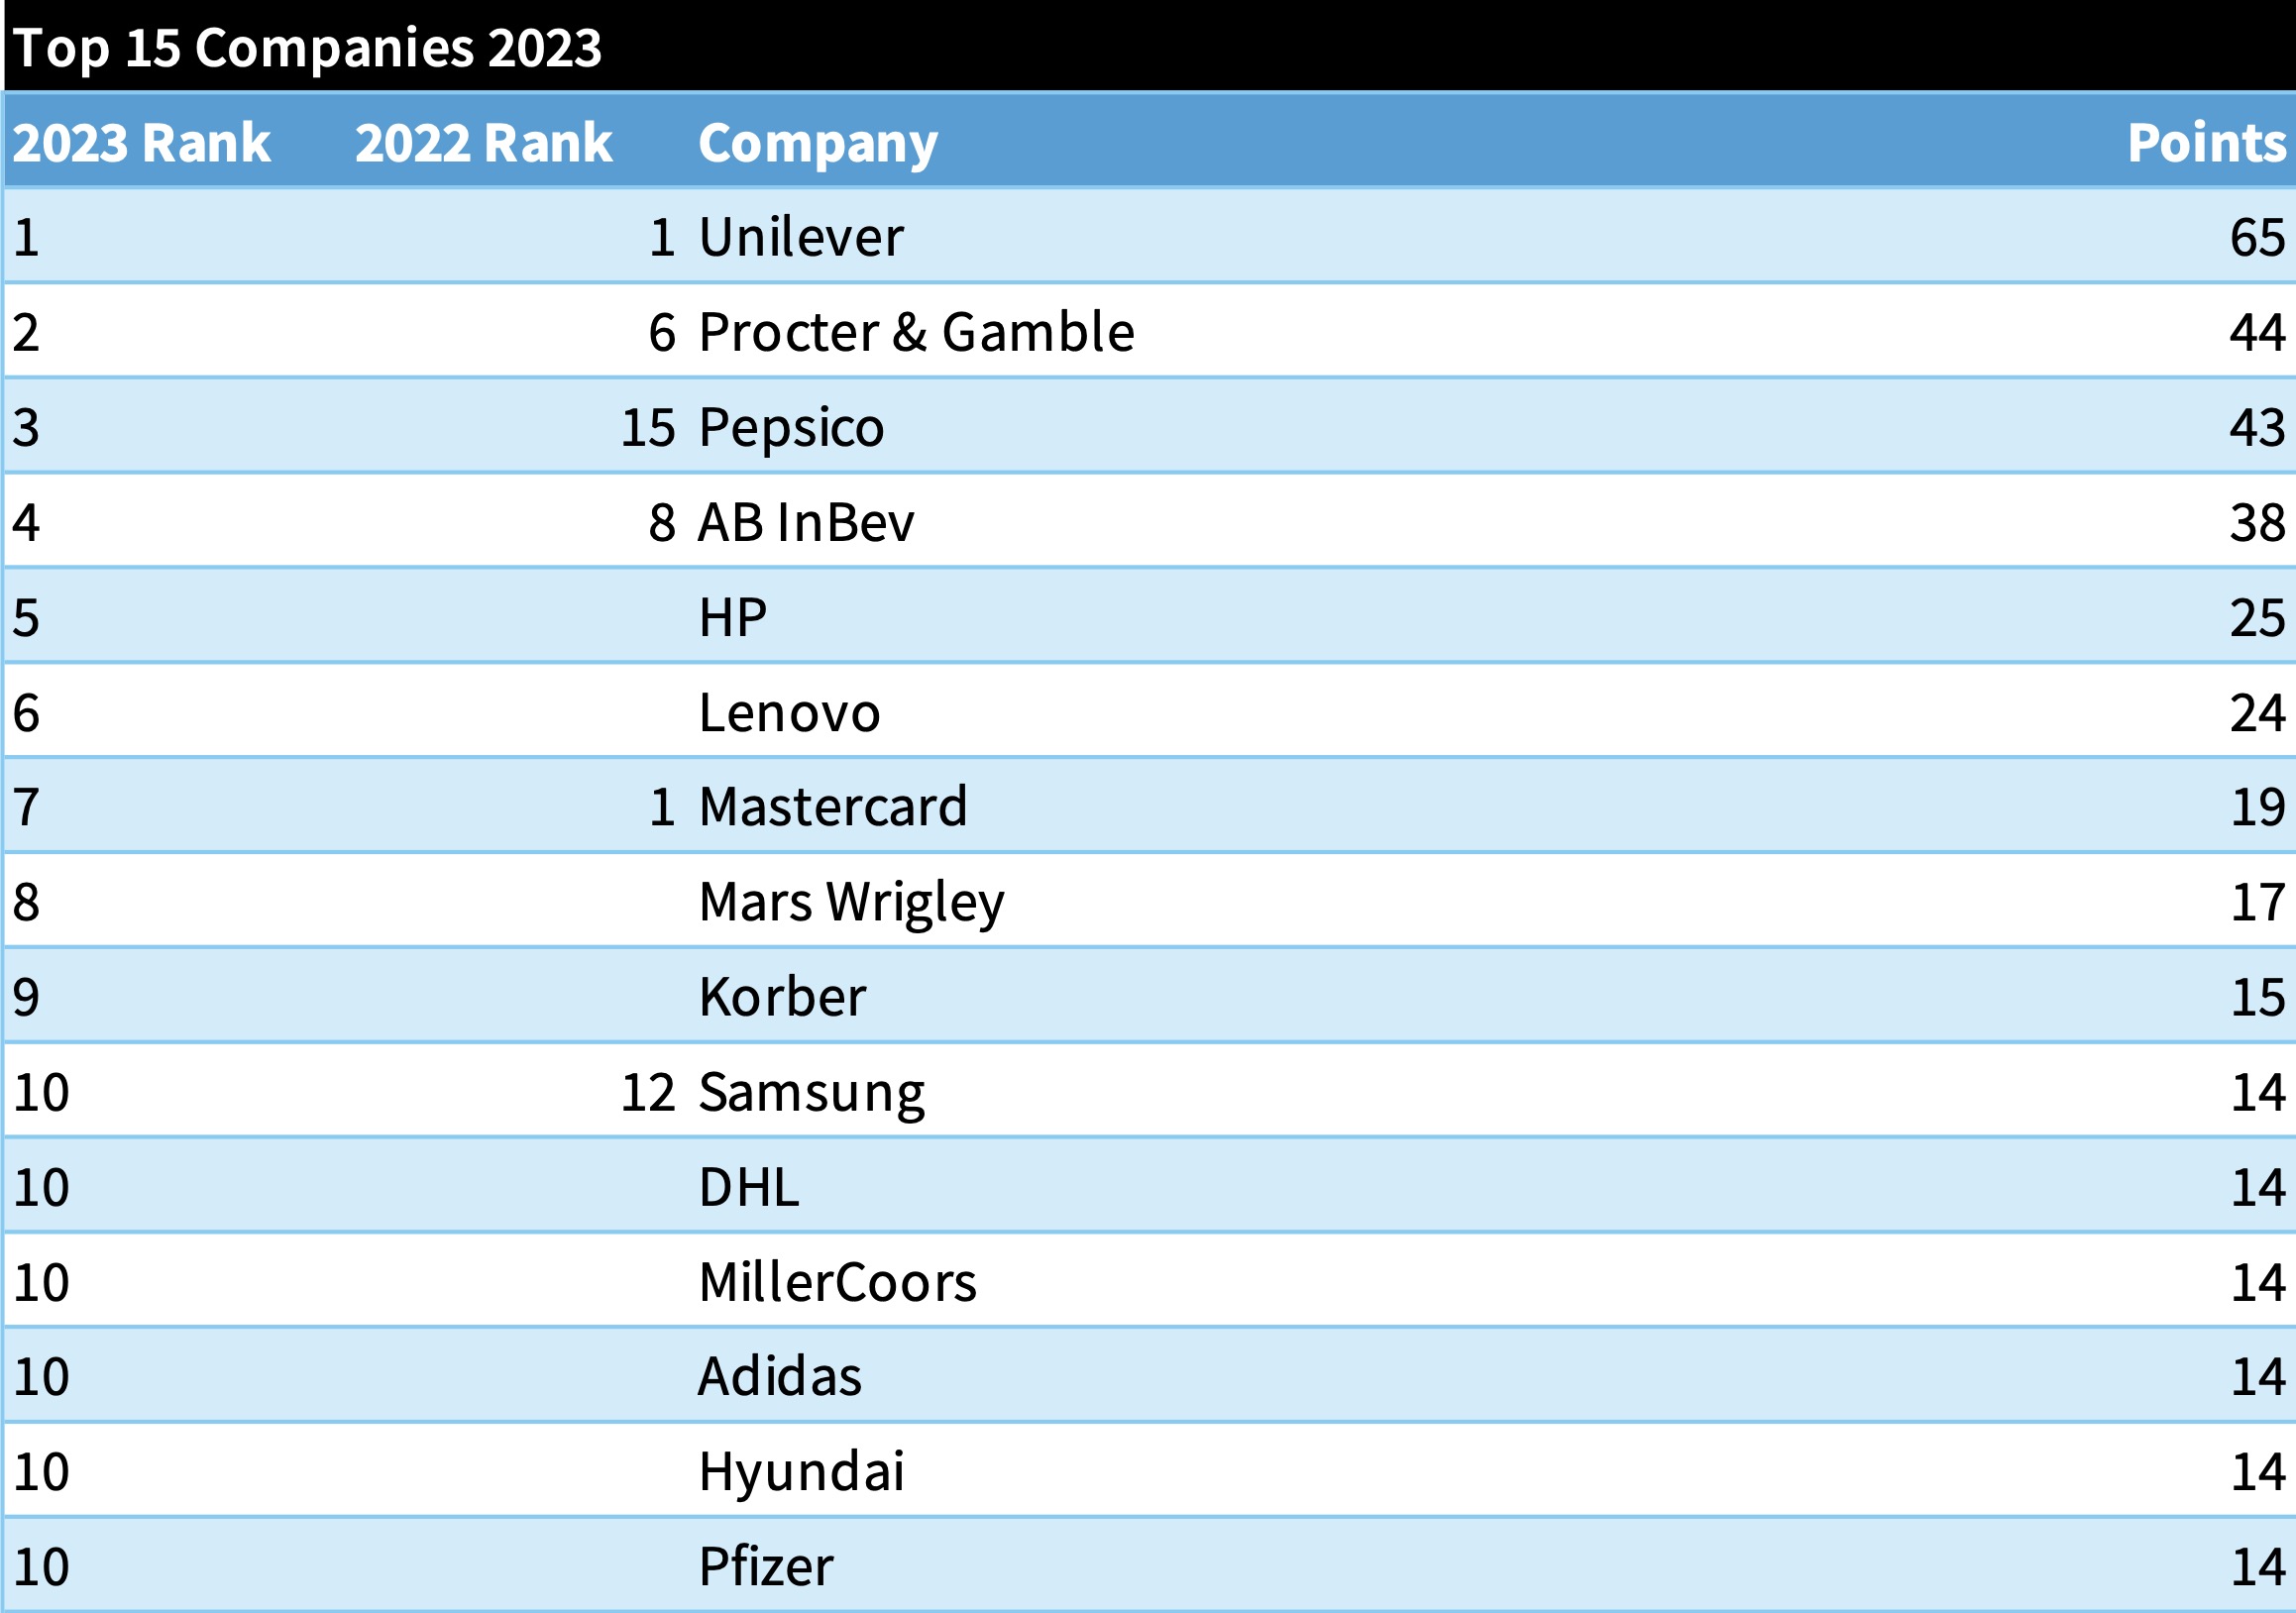 Top 15 Companies 2023